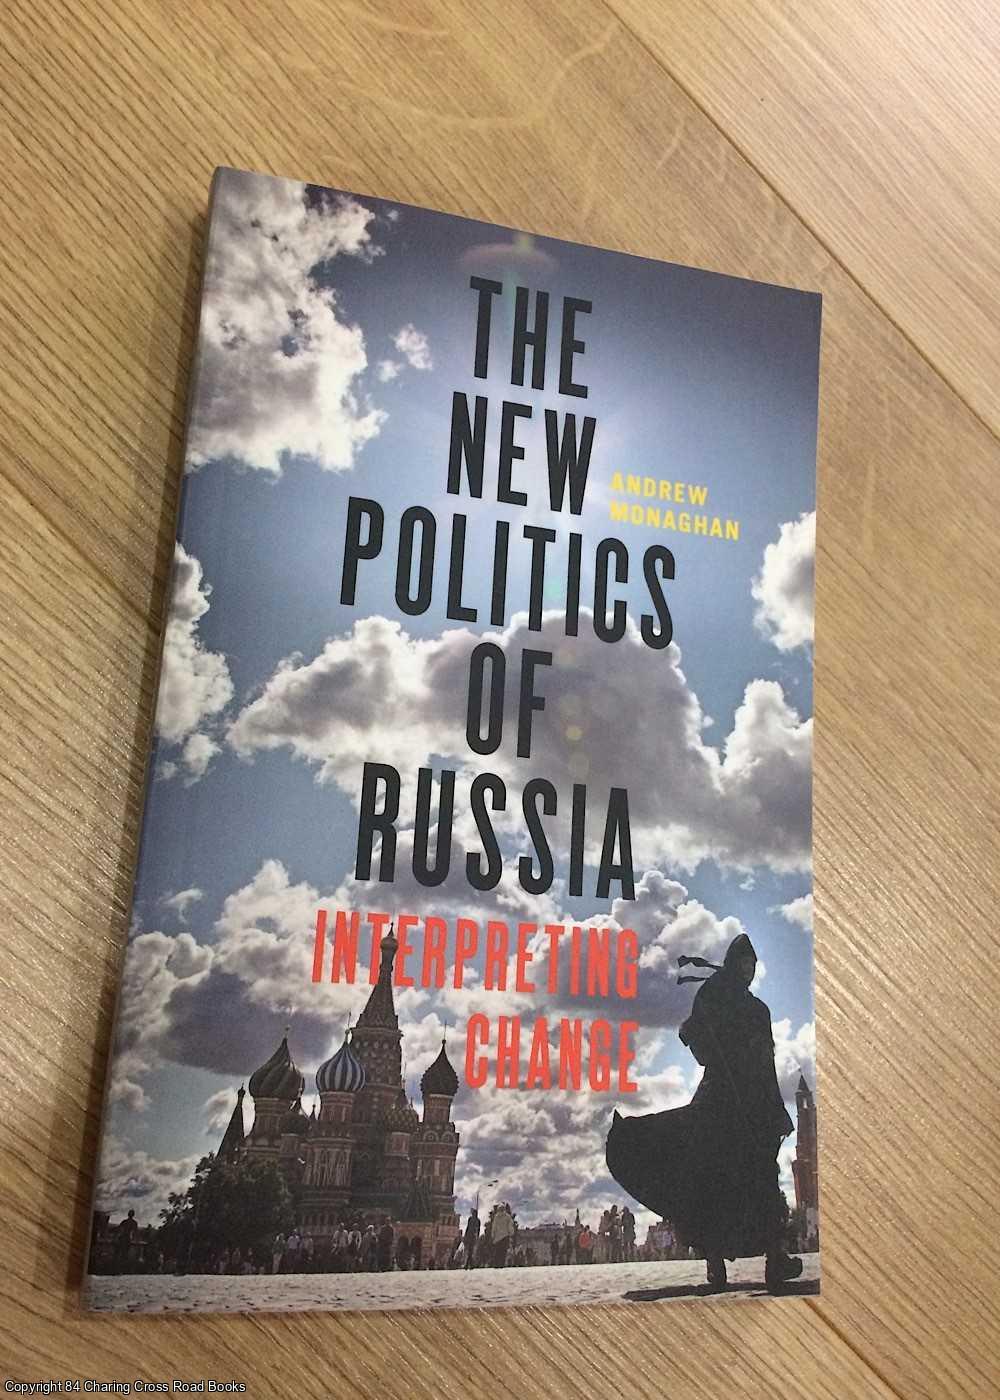 Monaghan, Andrew - The New Politics of Russia: Interpreting Change